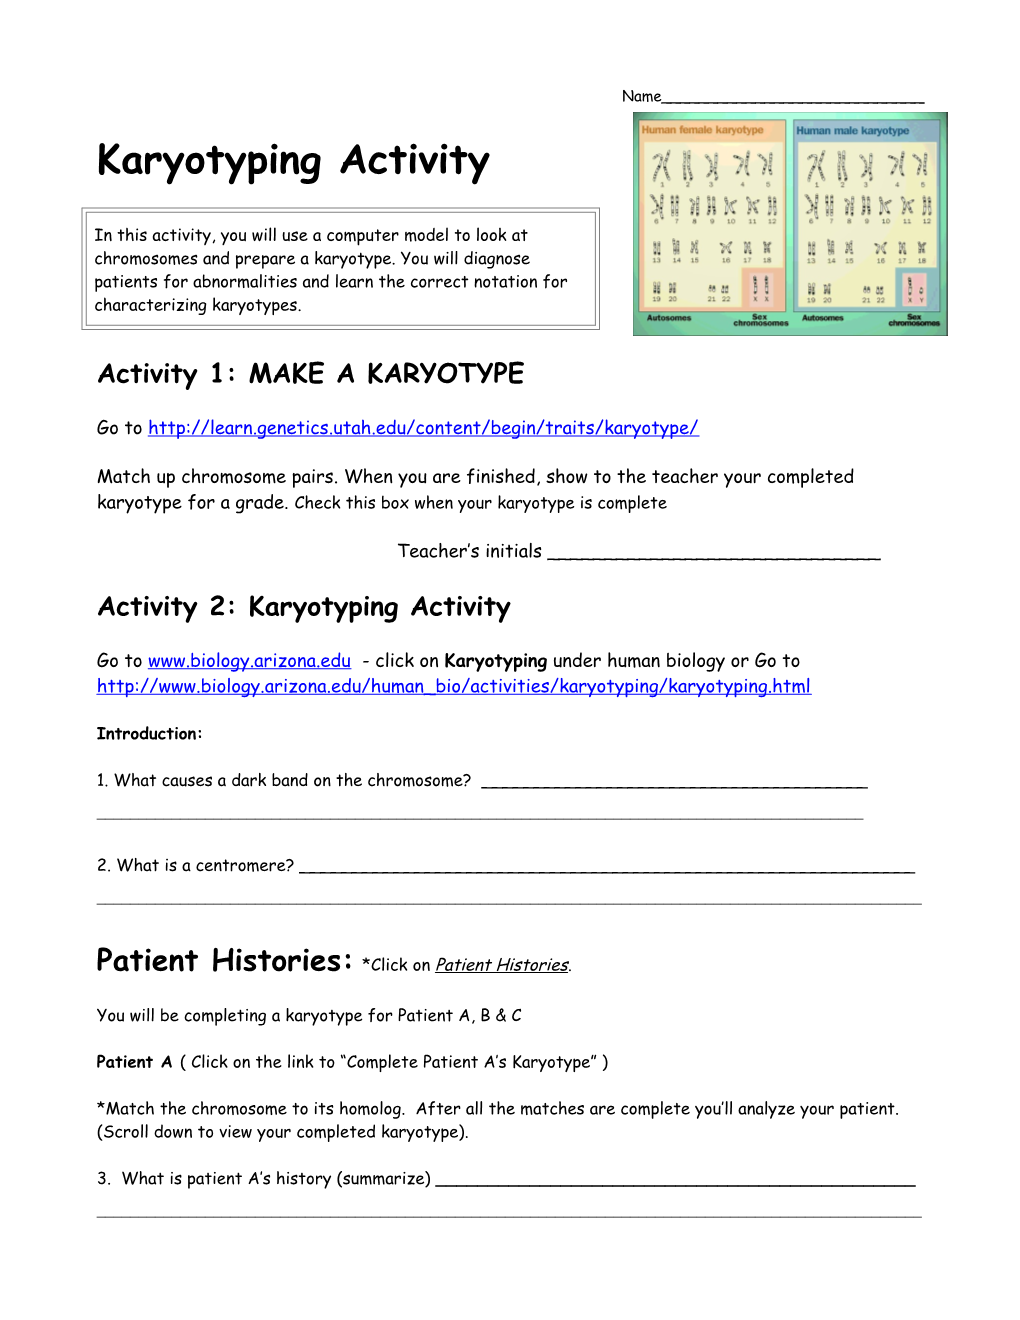 Karyotyping Activity